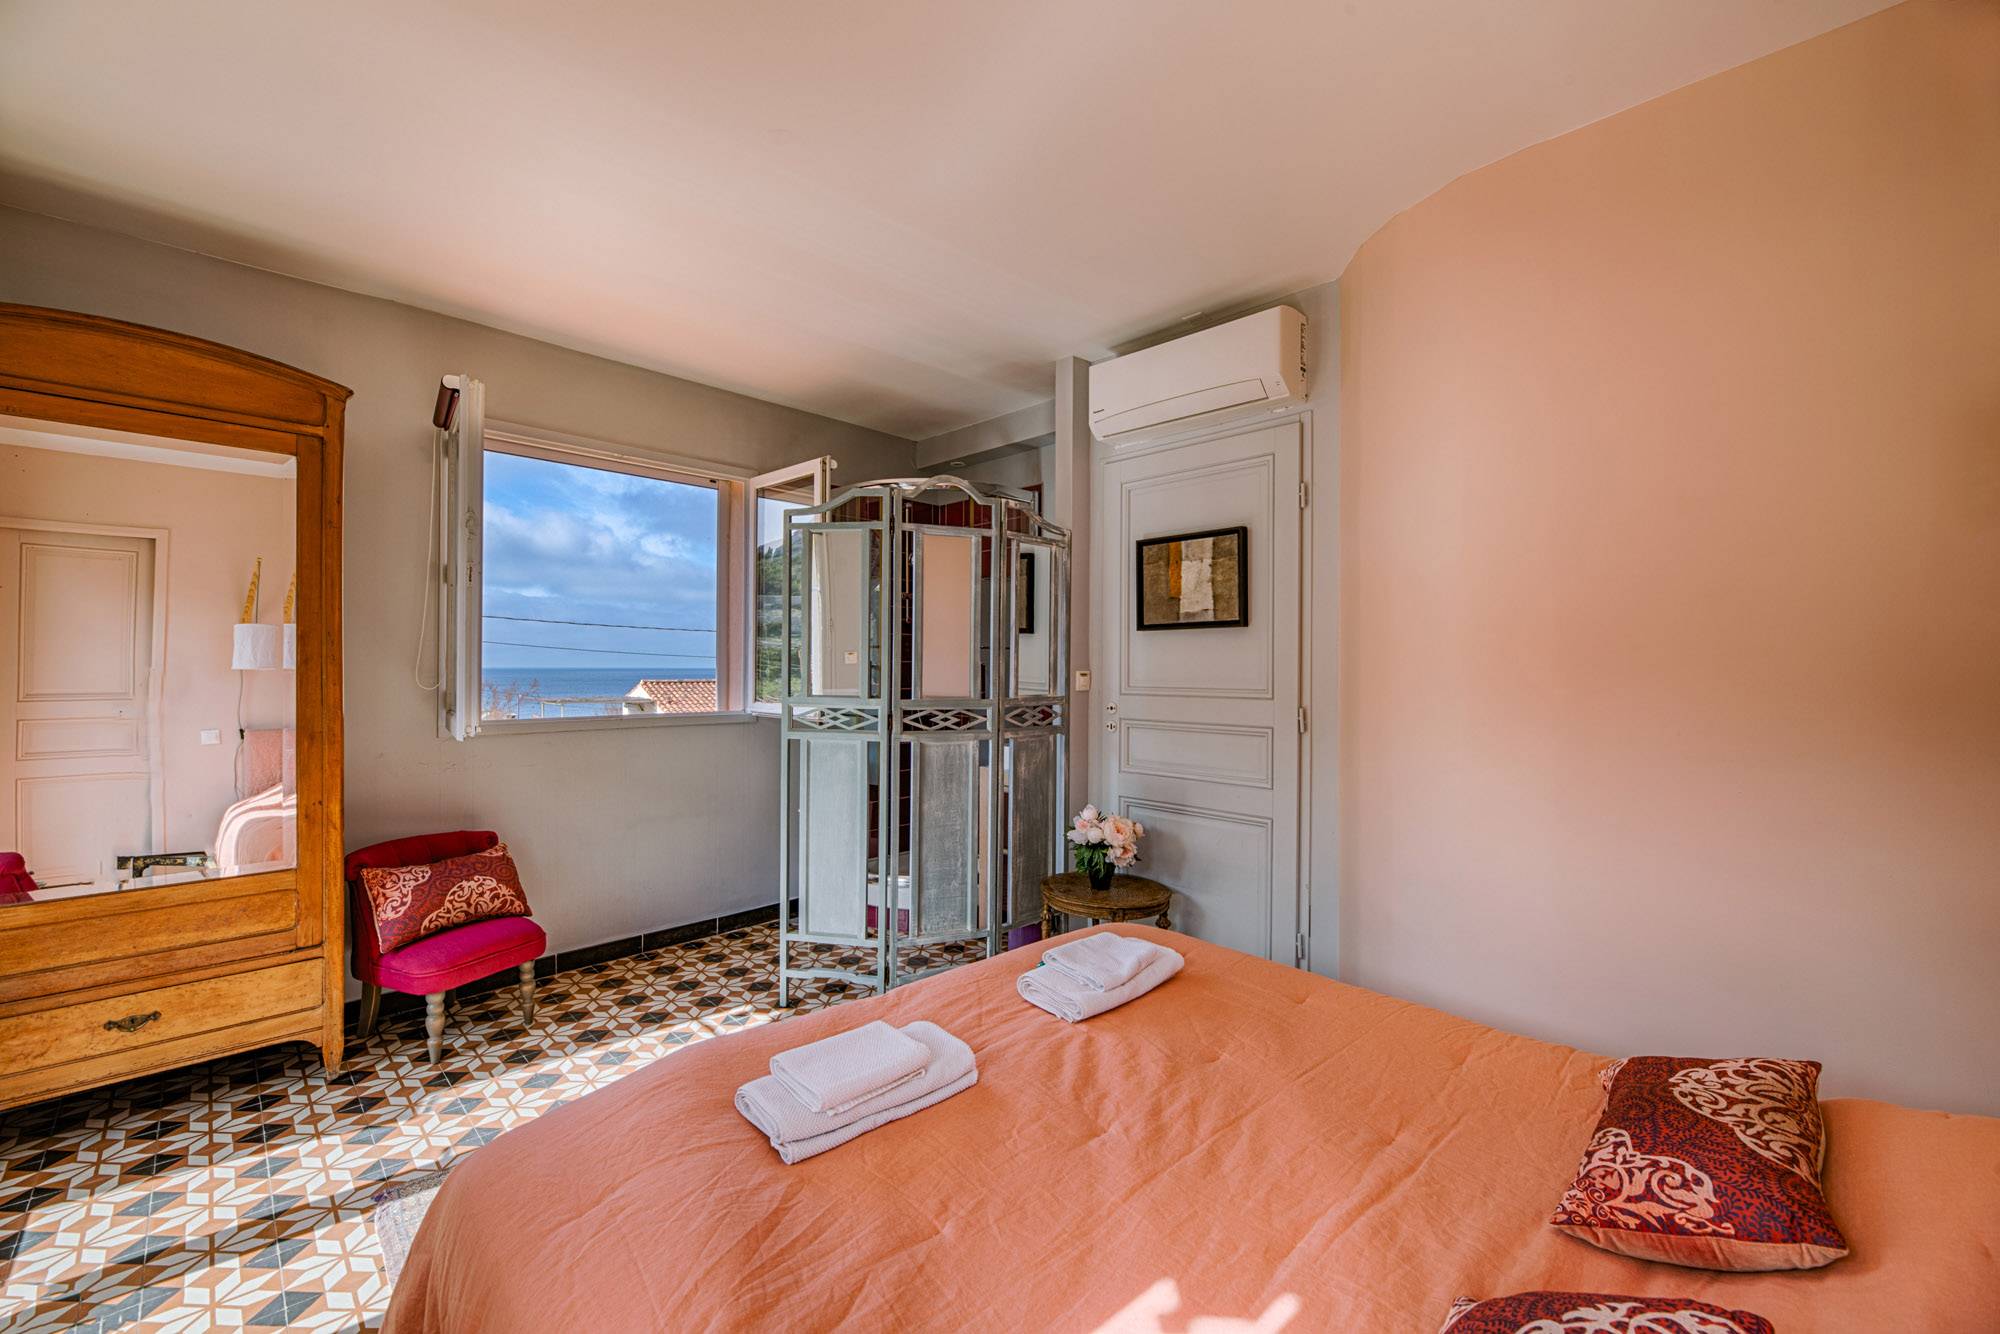 Location chambres d'hôtes Marseille vue mer et massif des calanques